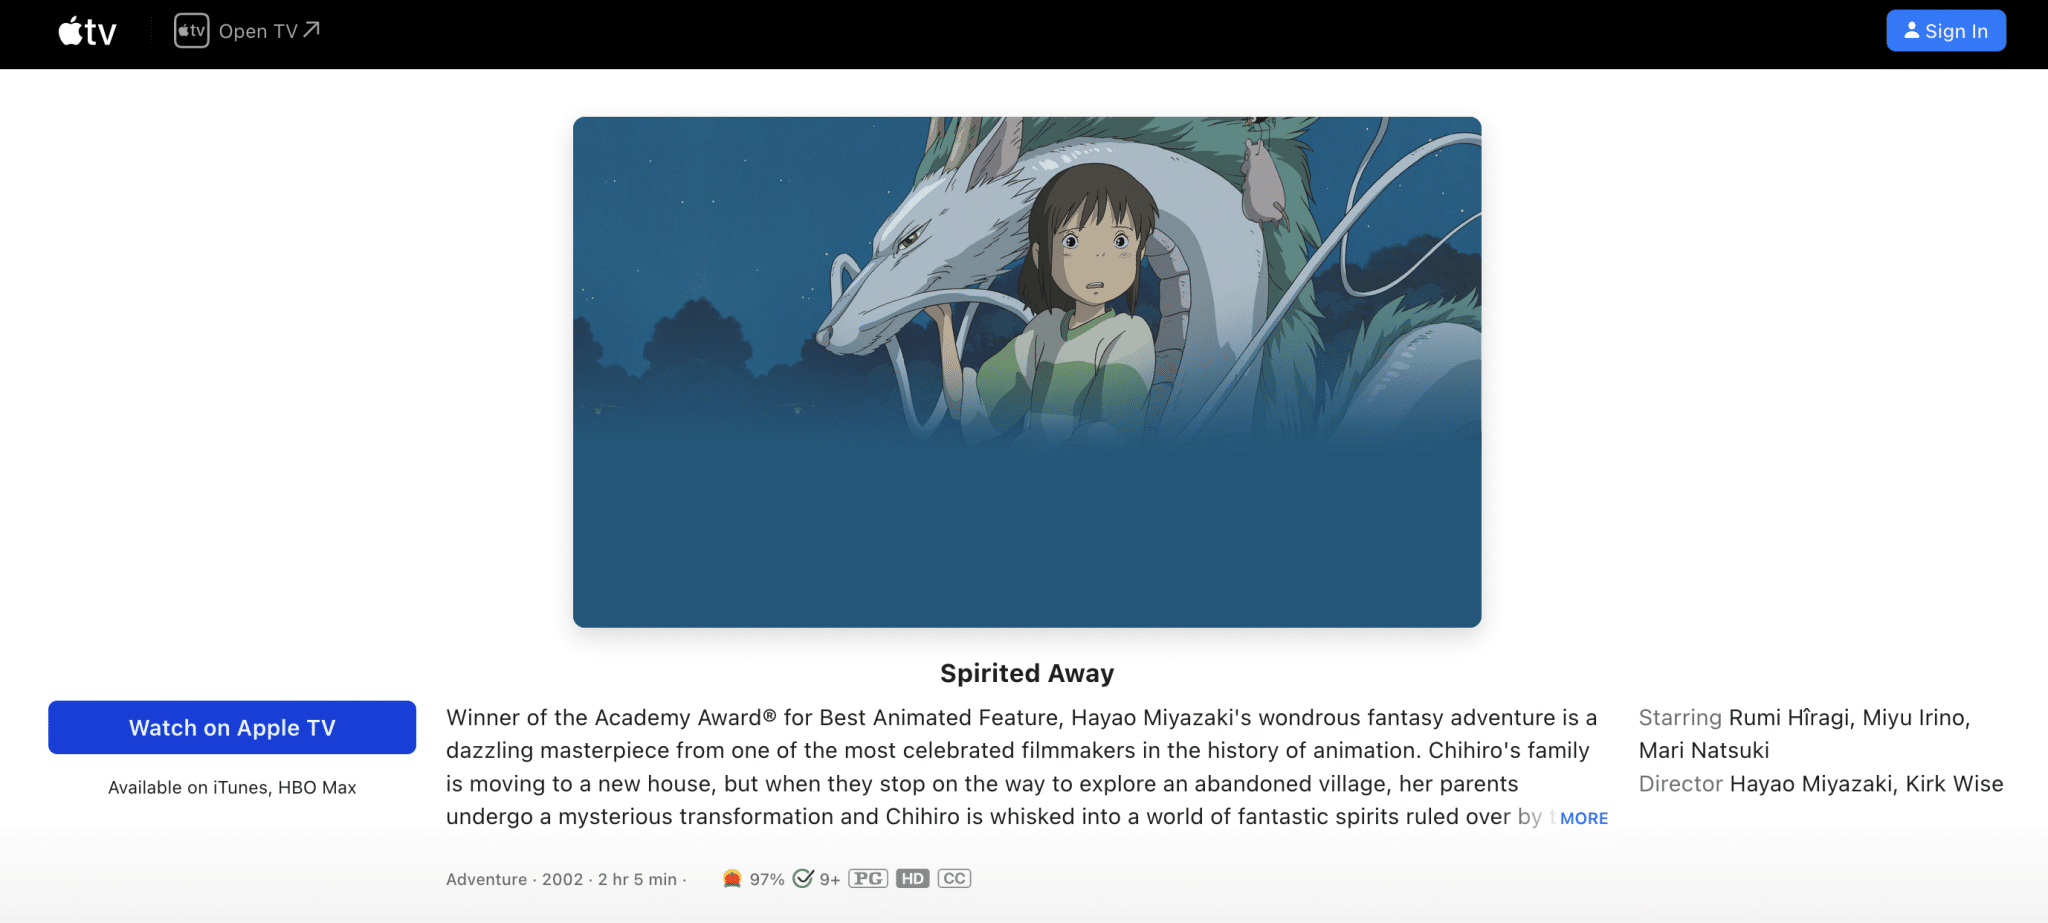 Spirited Away (Hayao Miyazaki, Studio Ghibli) on Apple TV